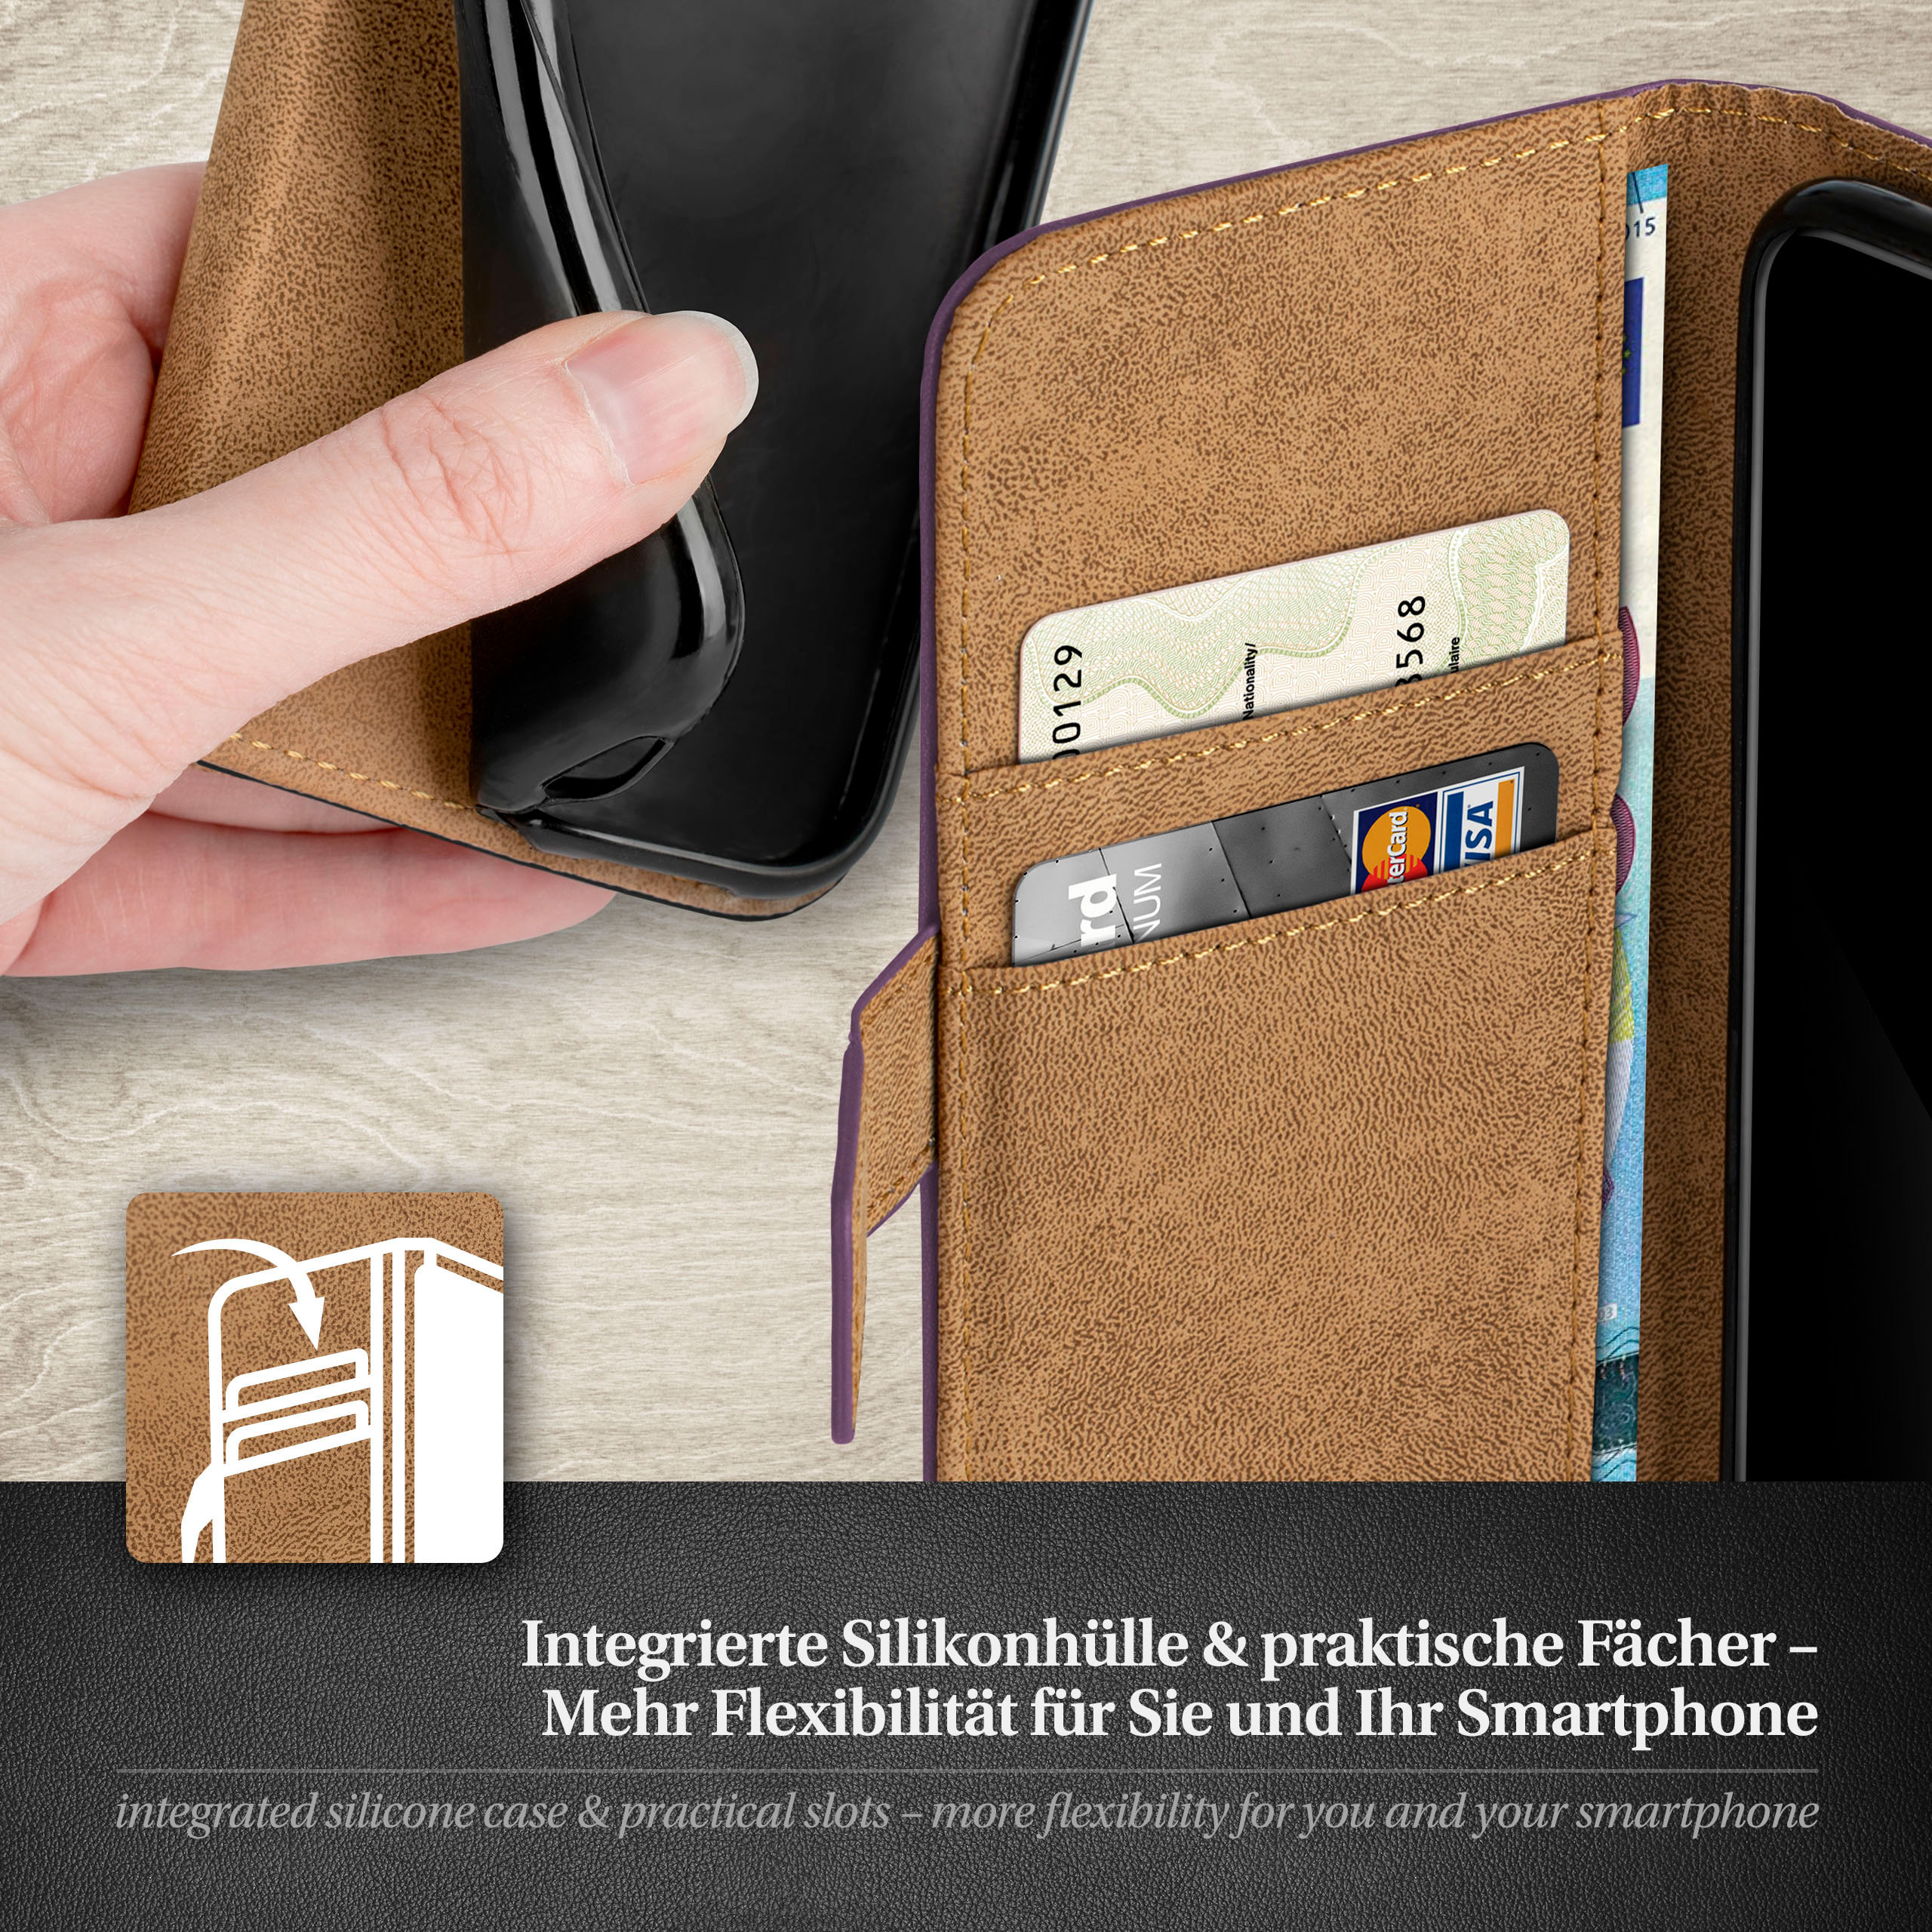 Galaxy MOEX S8 Bookcover, Case, Plus, Samsung, Book Indigo-Violet